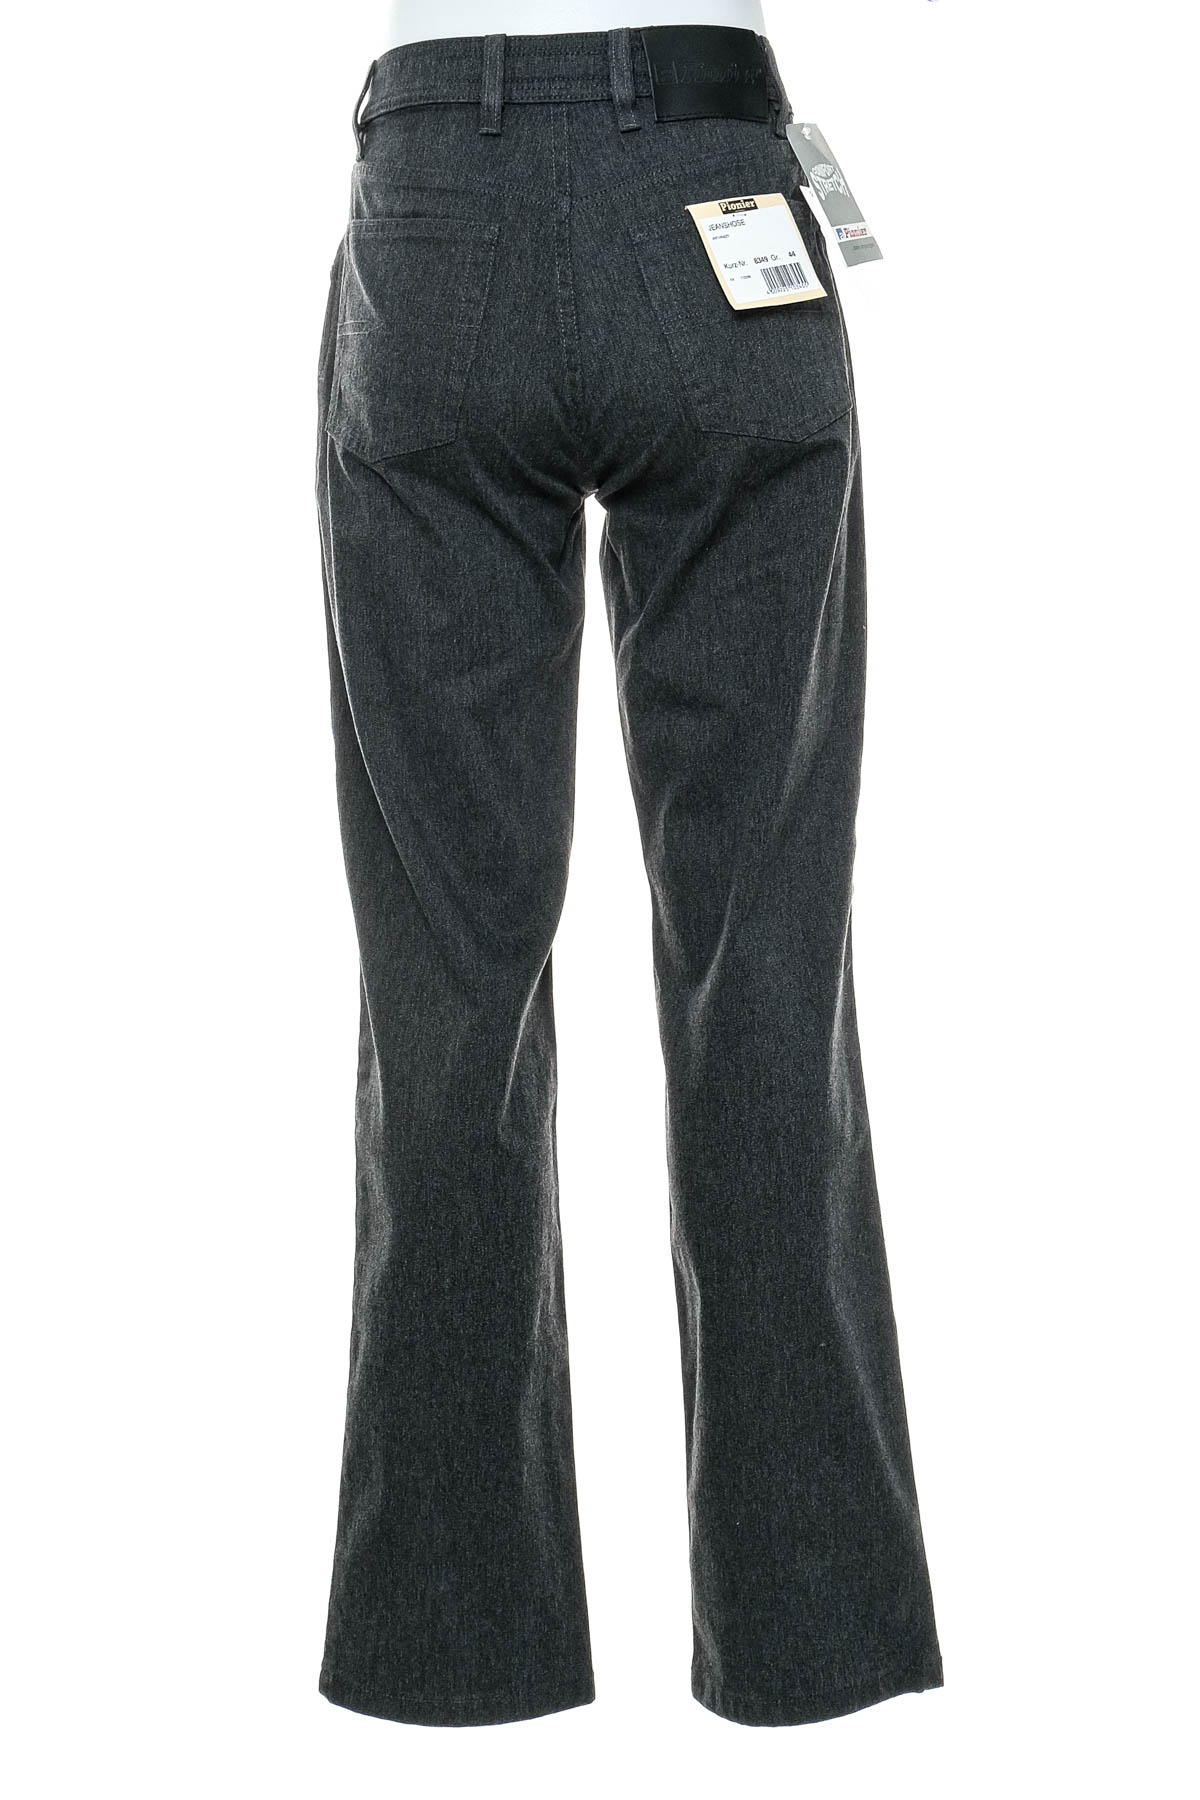 Pantalon pentru bărbați - PIONIER - 1